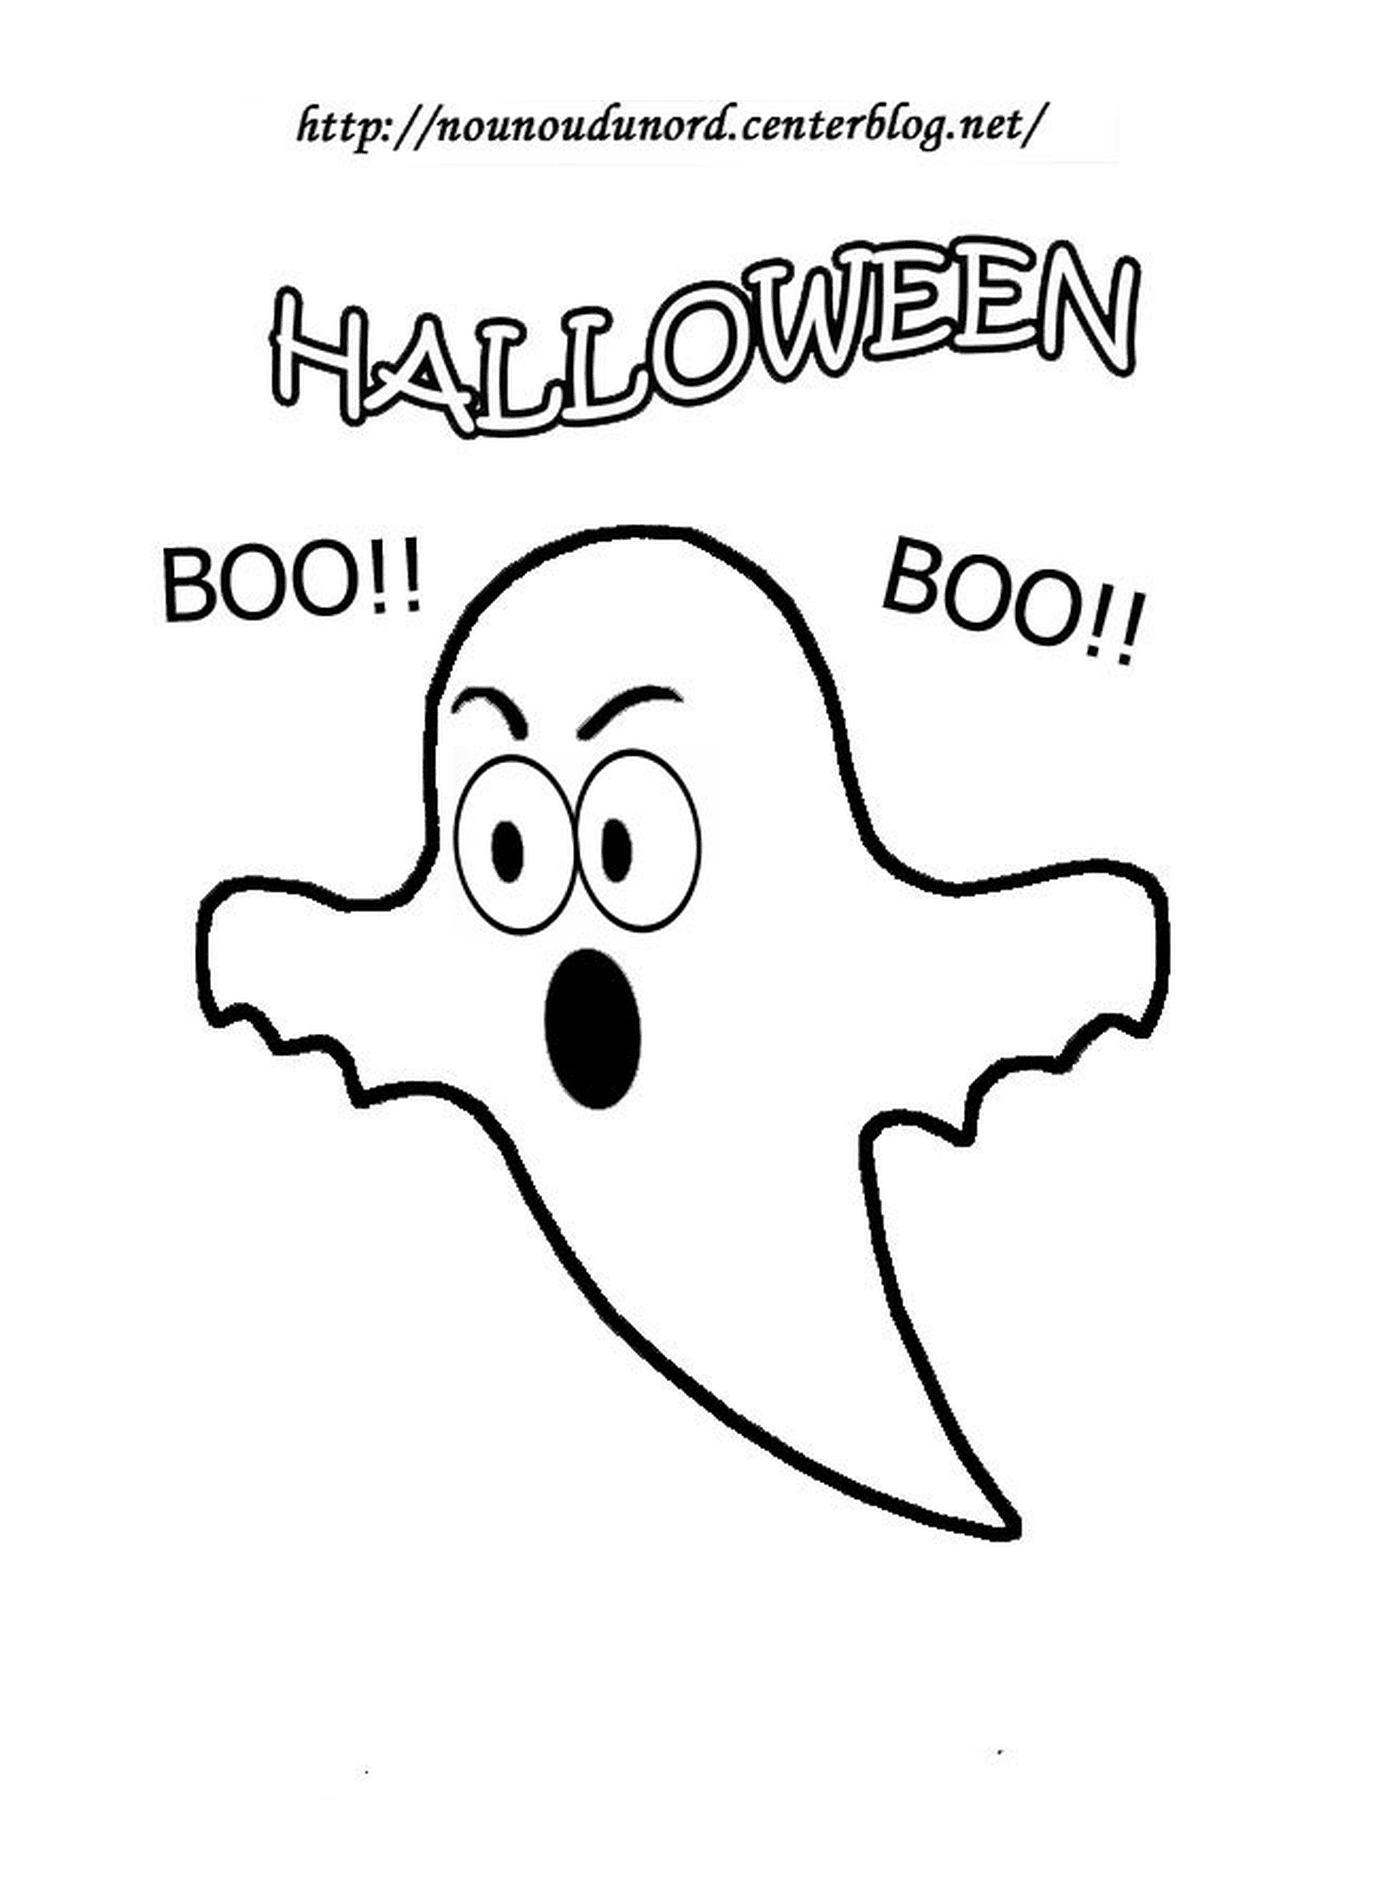   Halloween, fantôme boo 